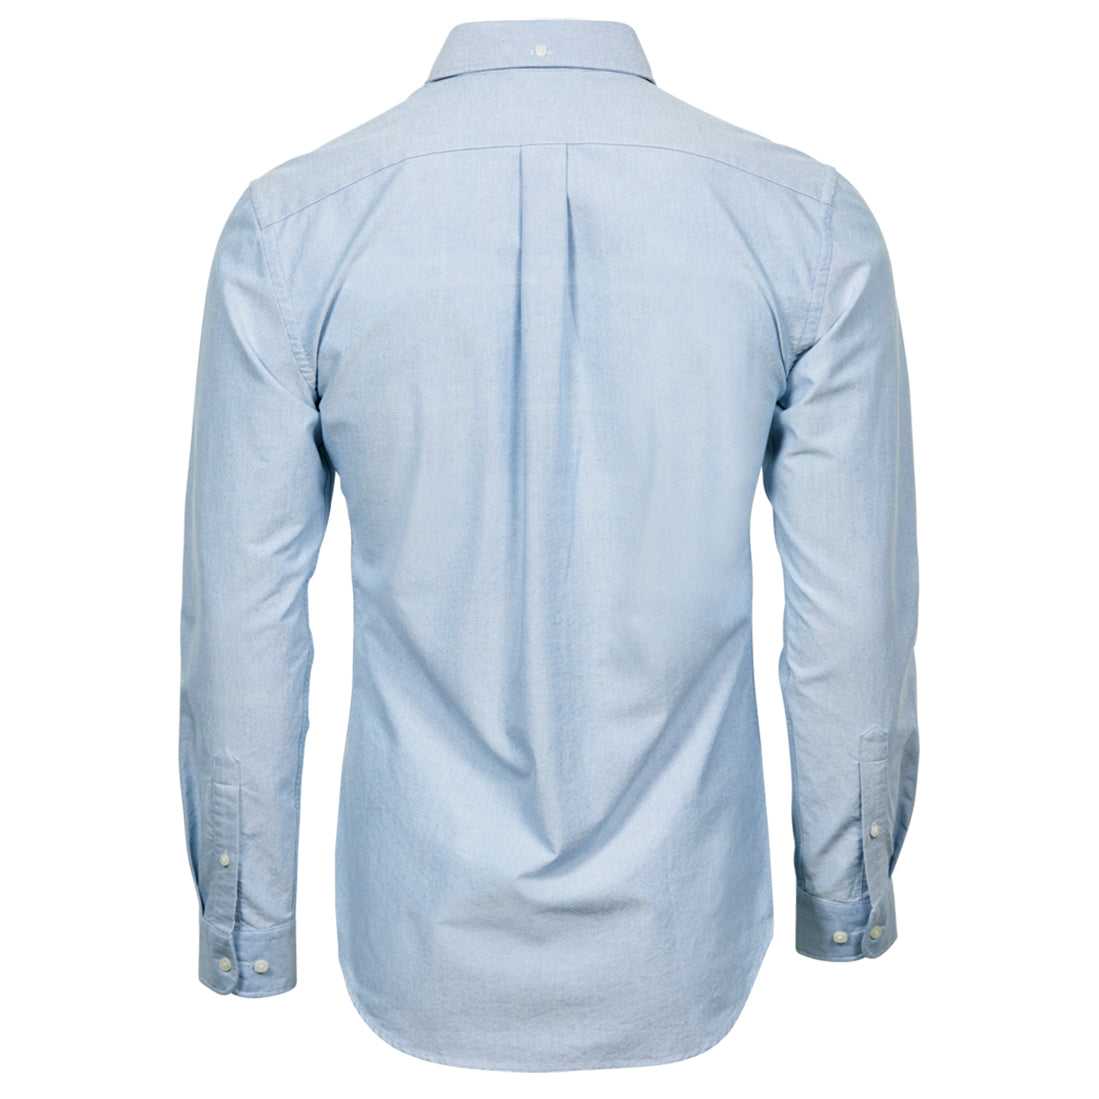 James №2 | Tailliert geschnittenes Oxford Hemd